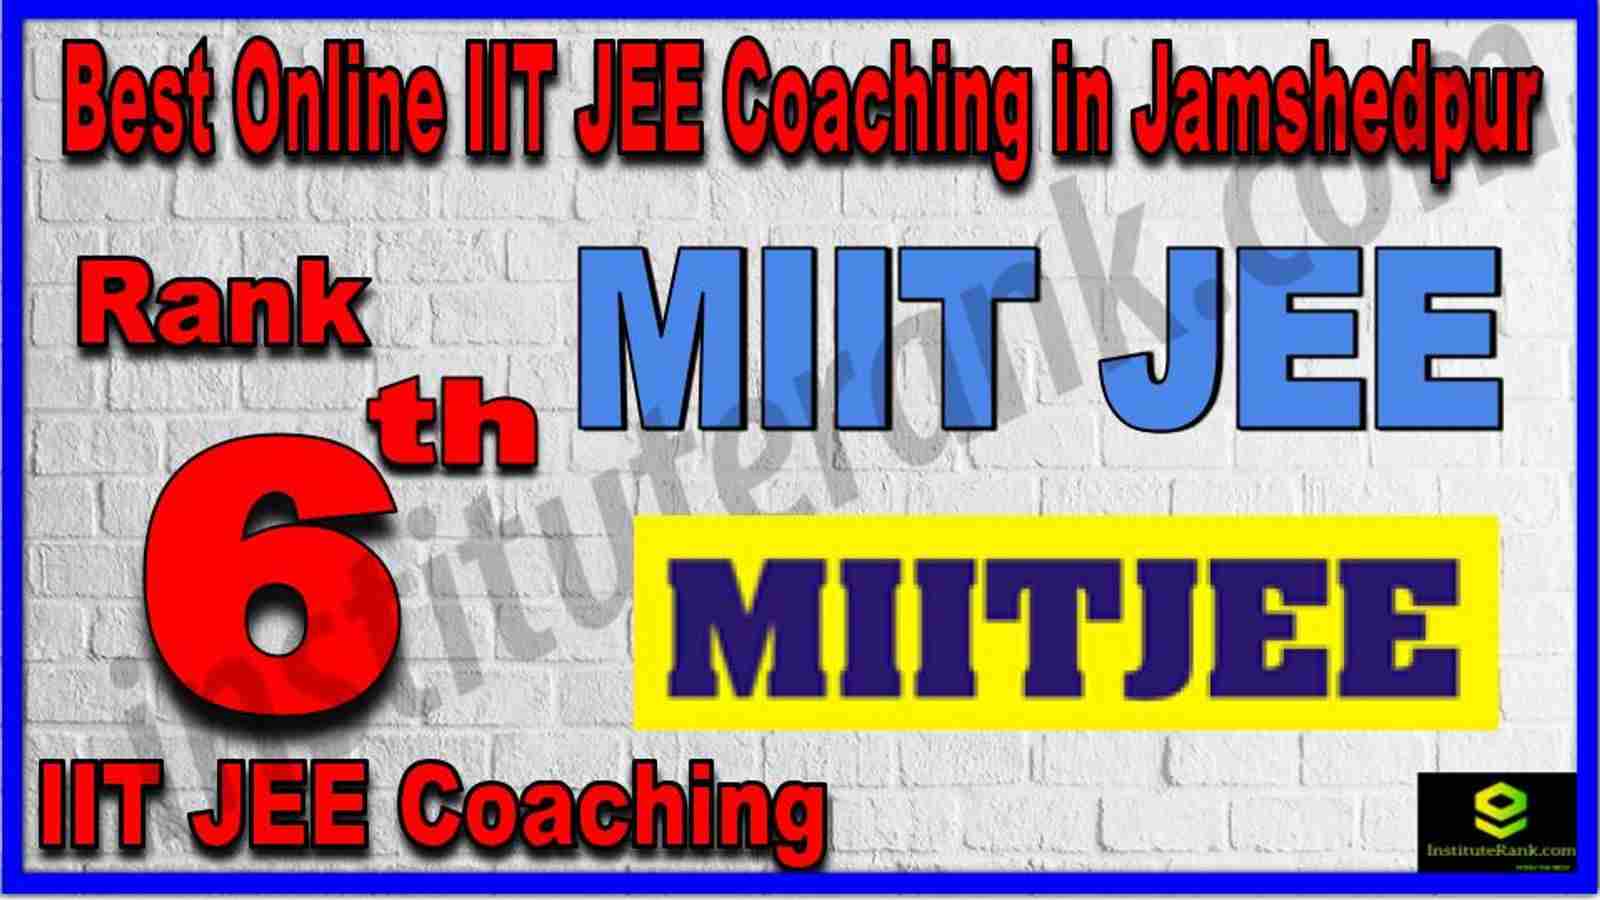 Rank 6th Best Online IIT JEE Coaching in Jamshedpur